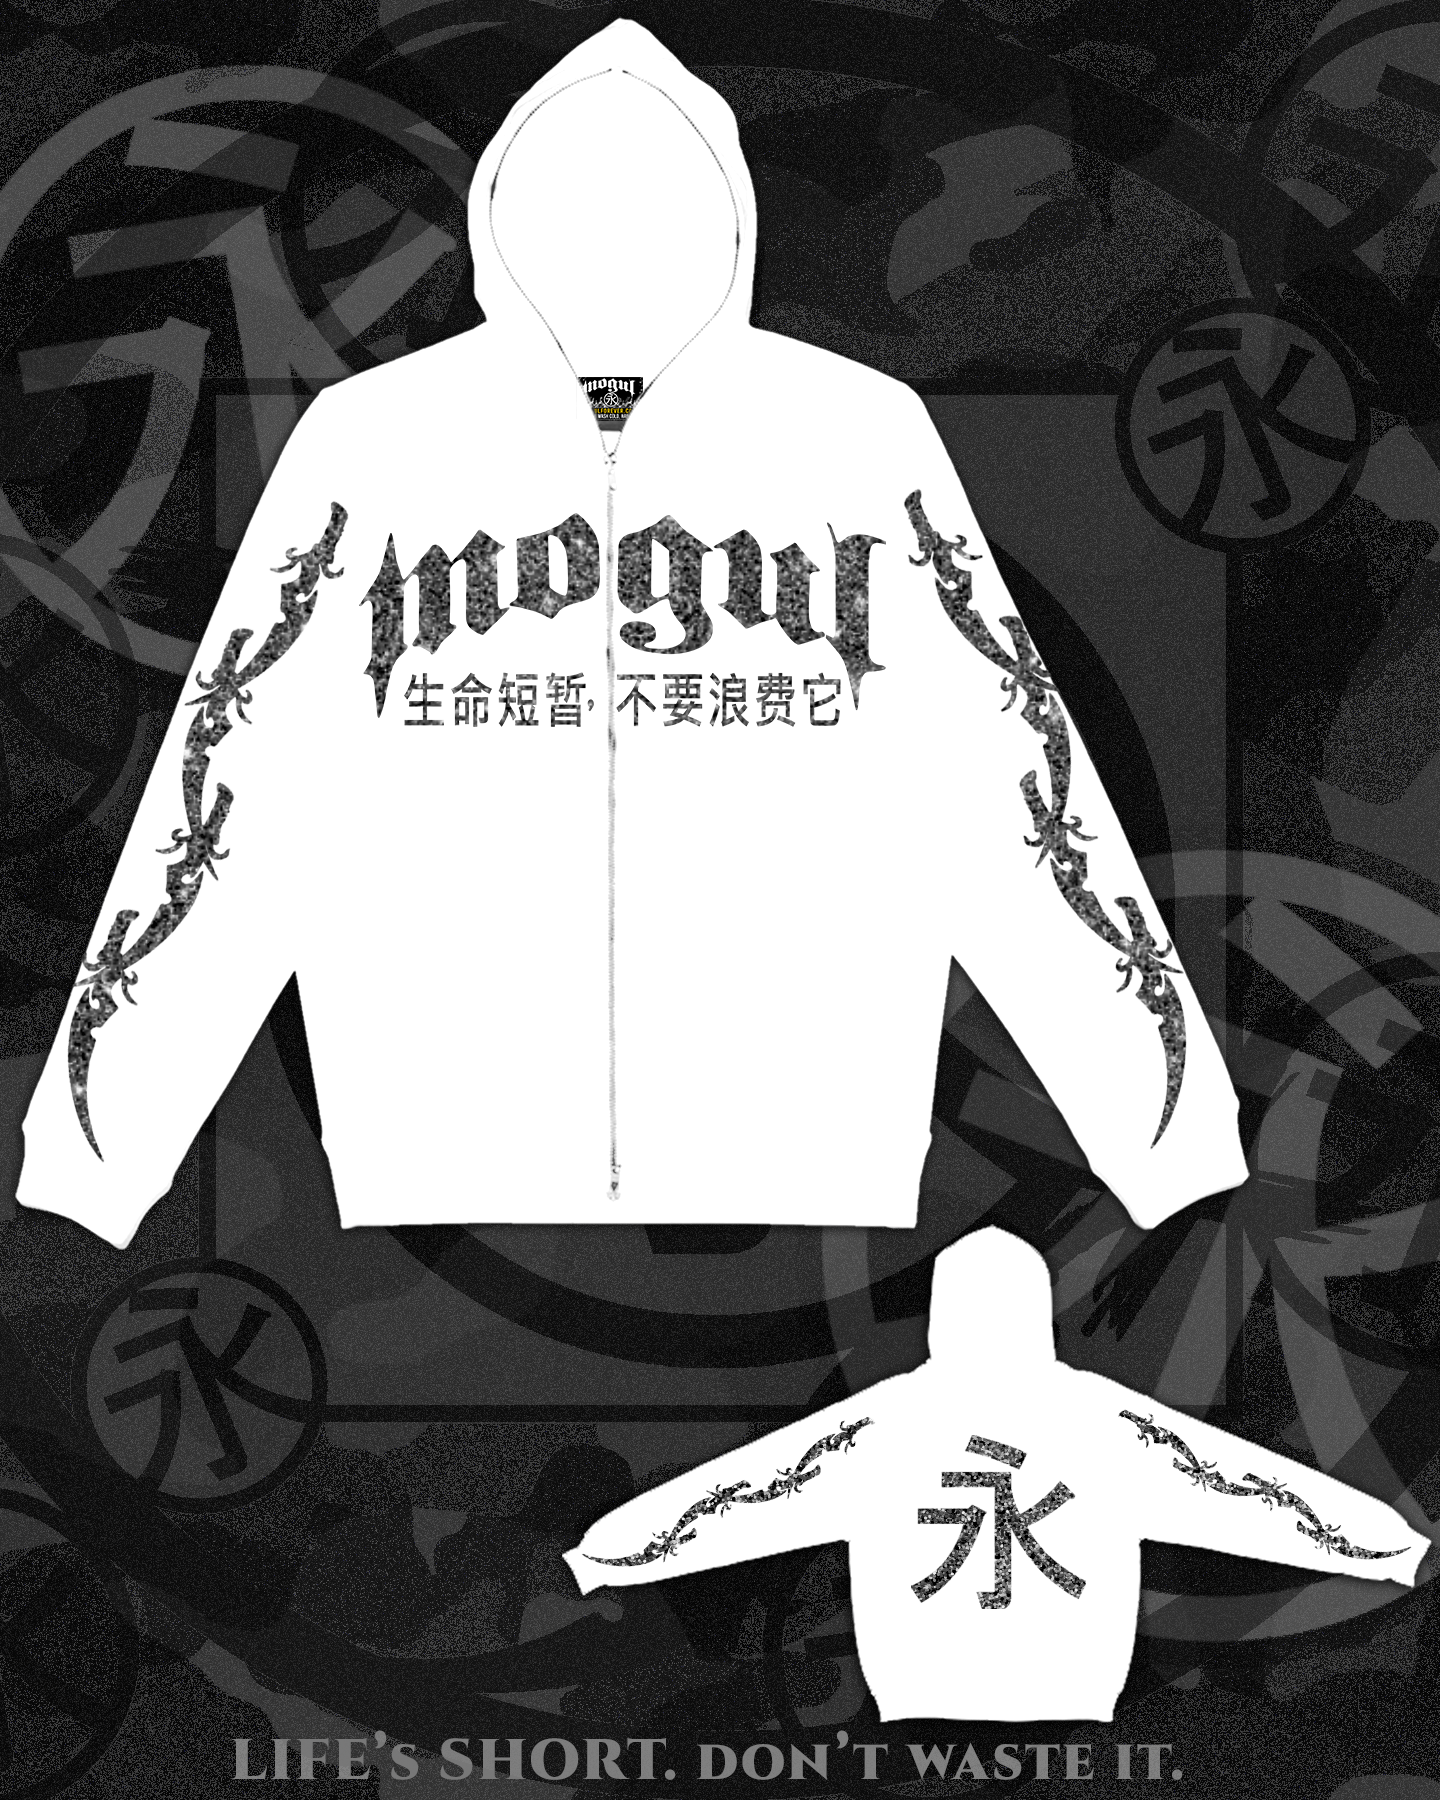 Dagger ~ Mogul VVS Full Zip (White) (LOW STOCK)